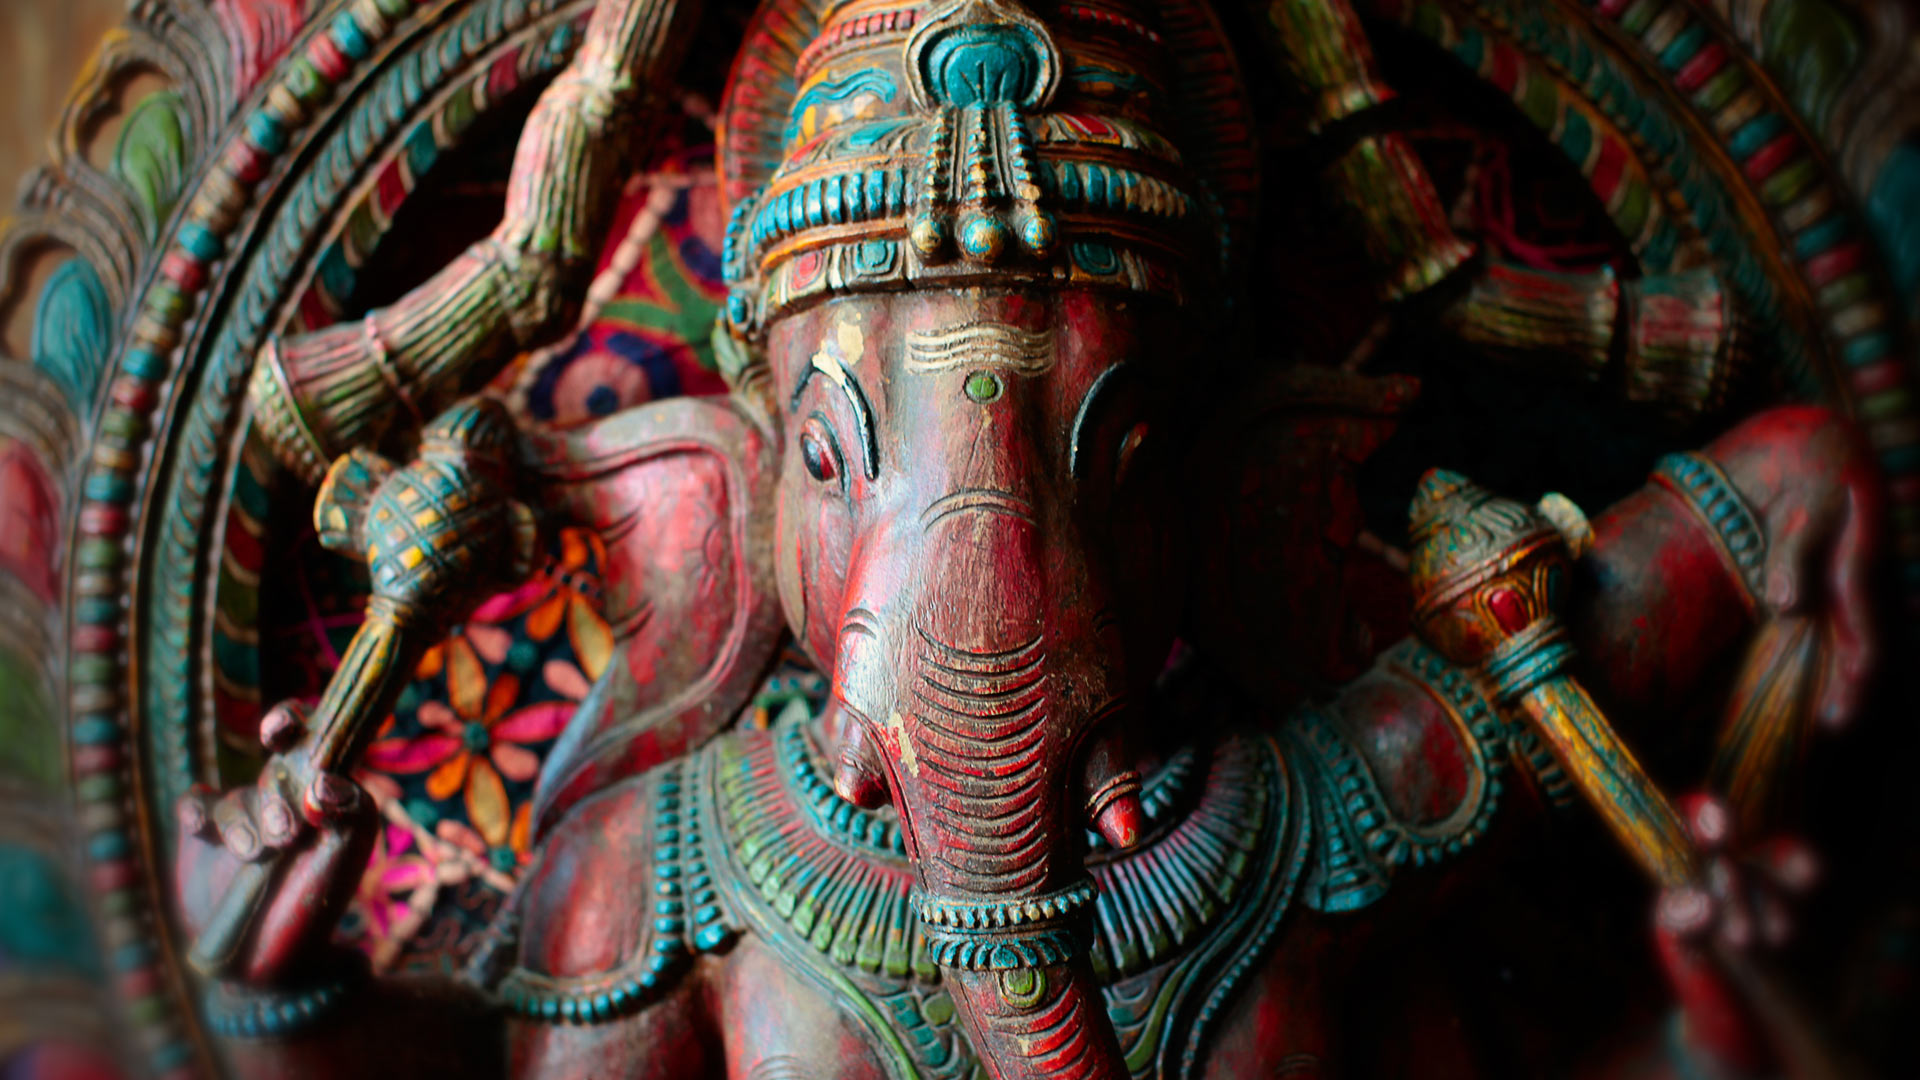 Ganesh Sculpture